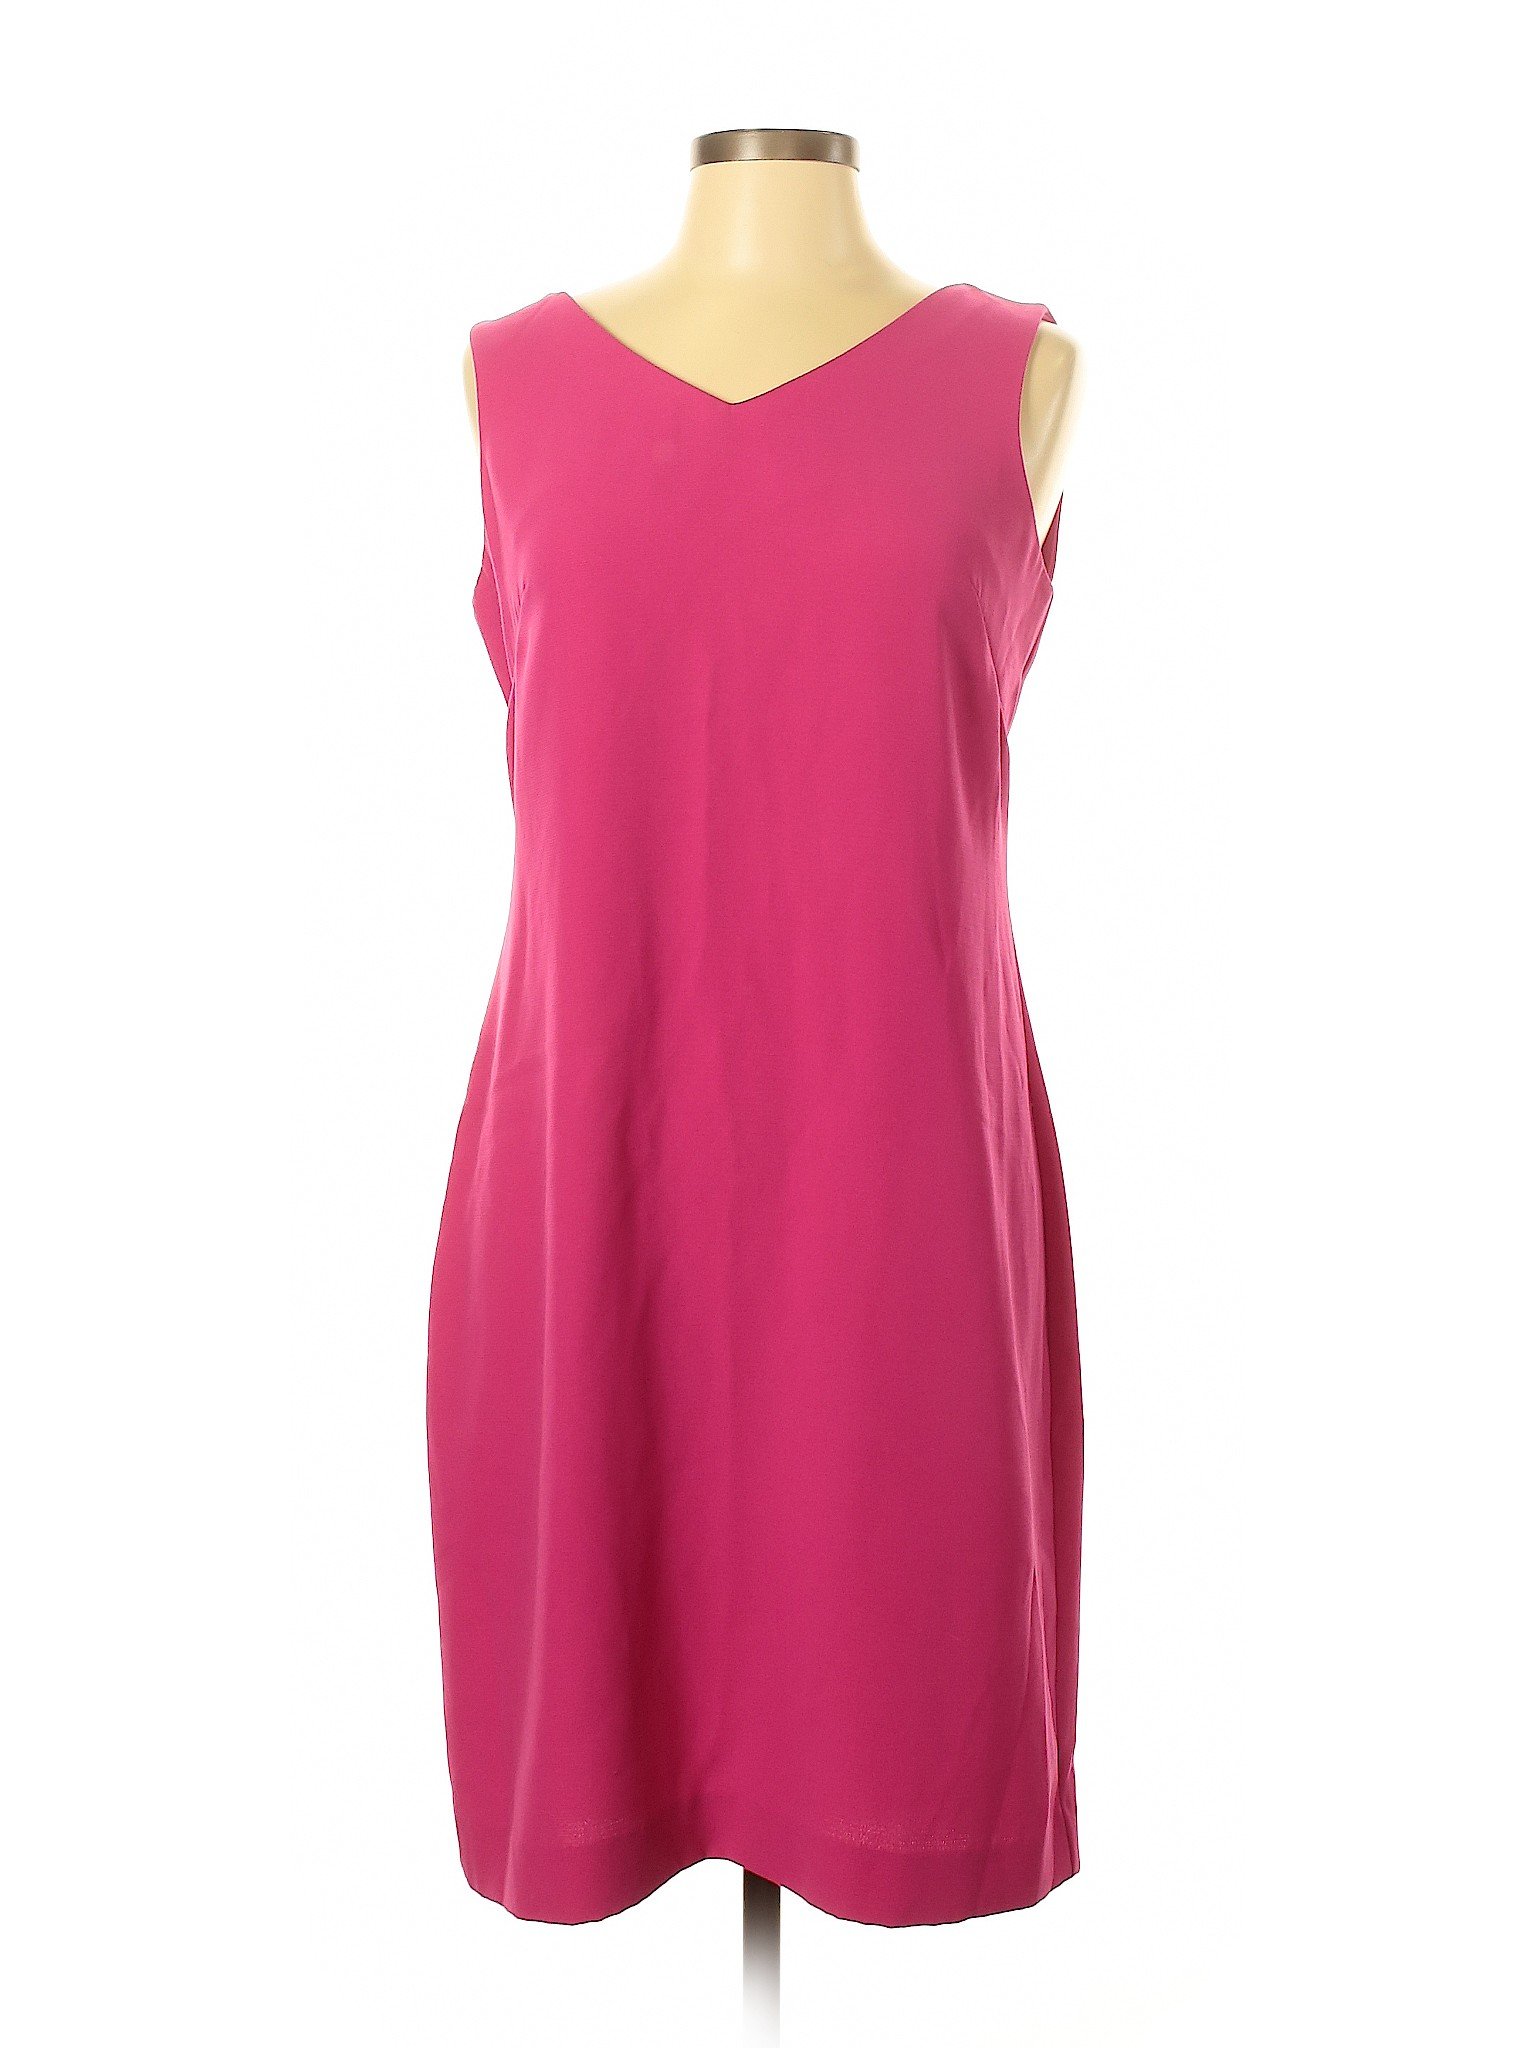 Danny & Nicole Women Pink Casual Dress 10 | eBay